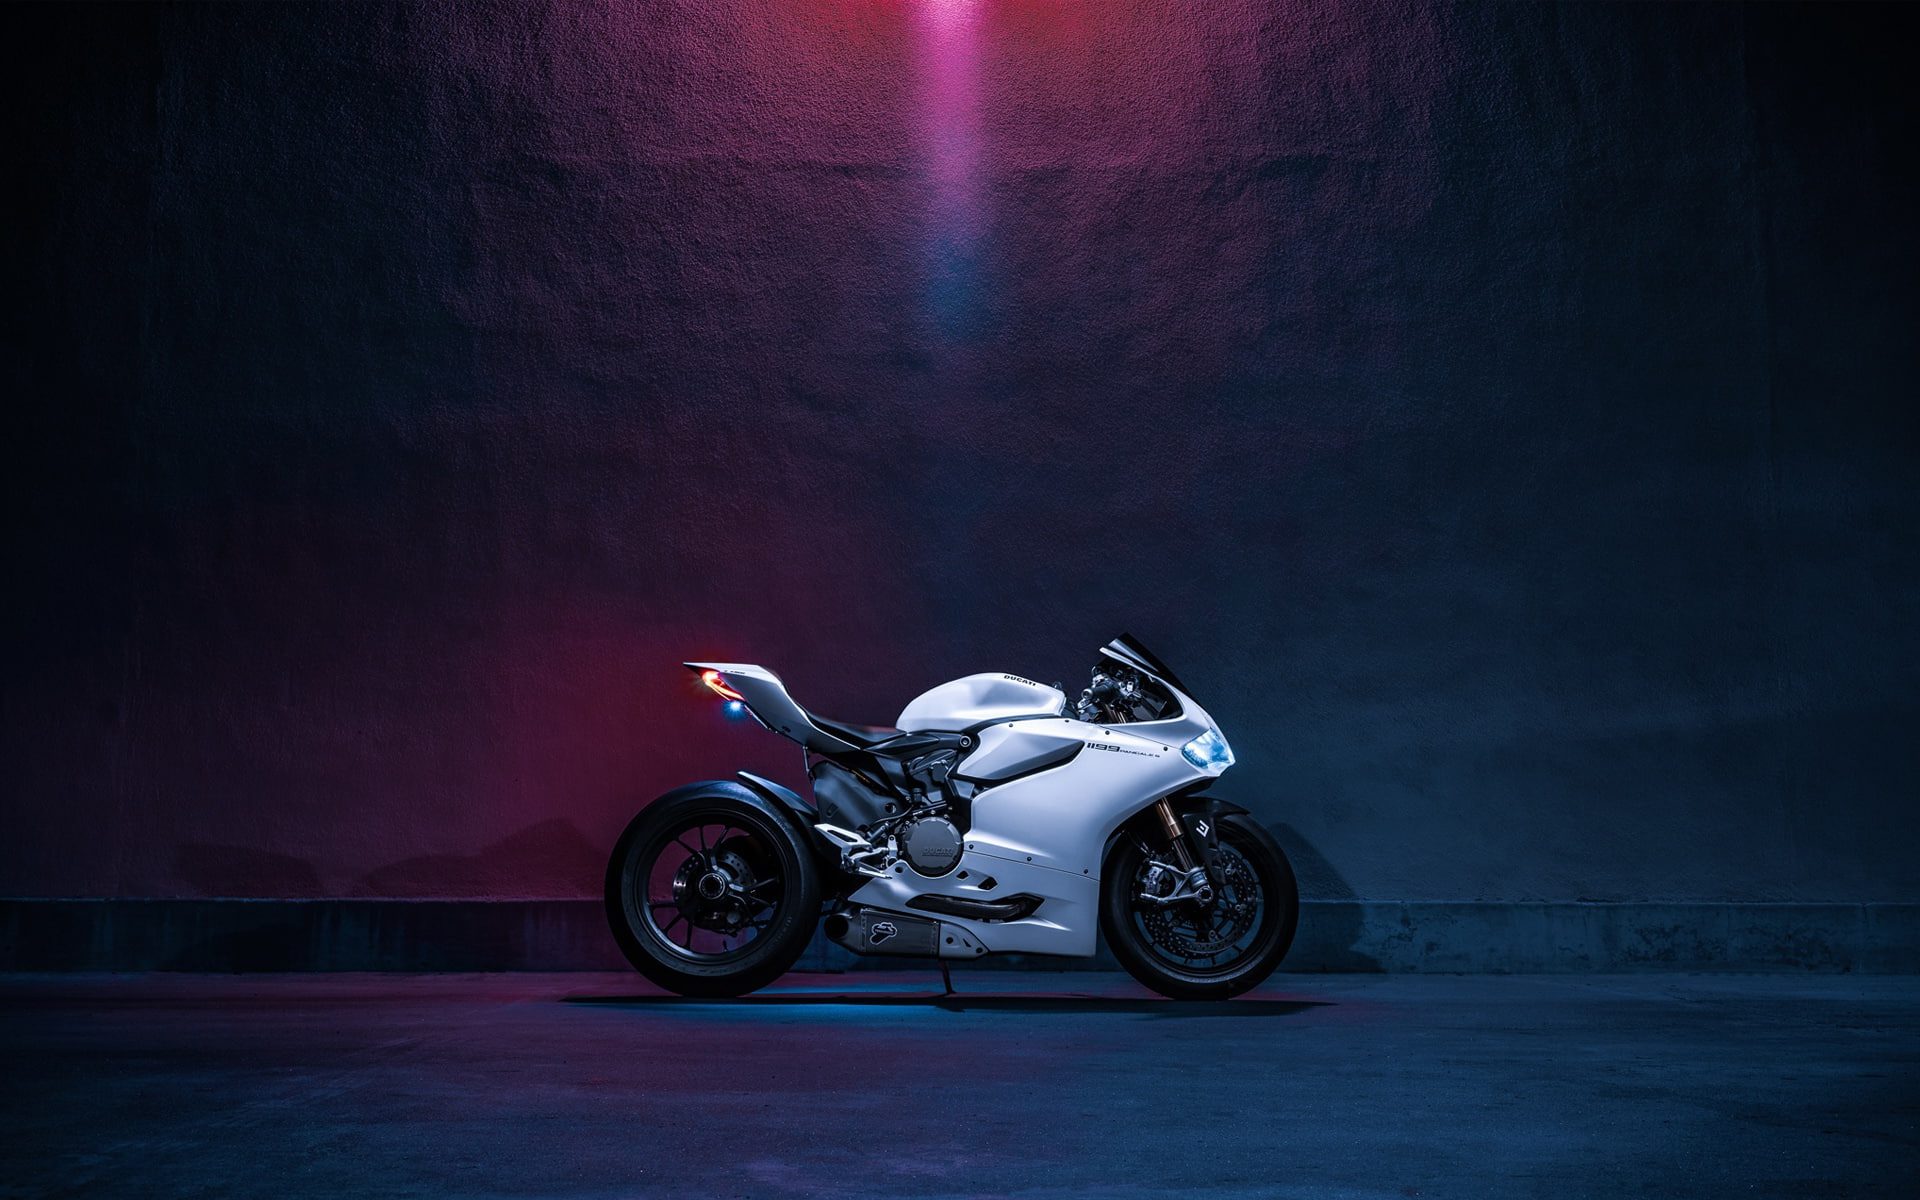 EICMA 2018 Ducati Panigale V4 R Unveiled Details Specs  Images   DriveSpark News